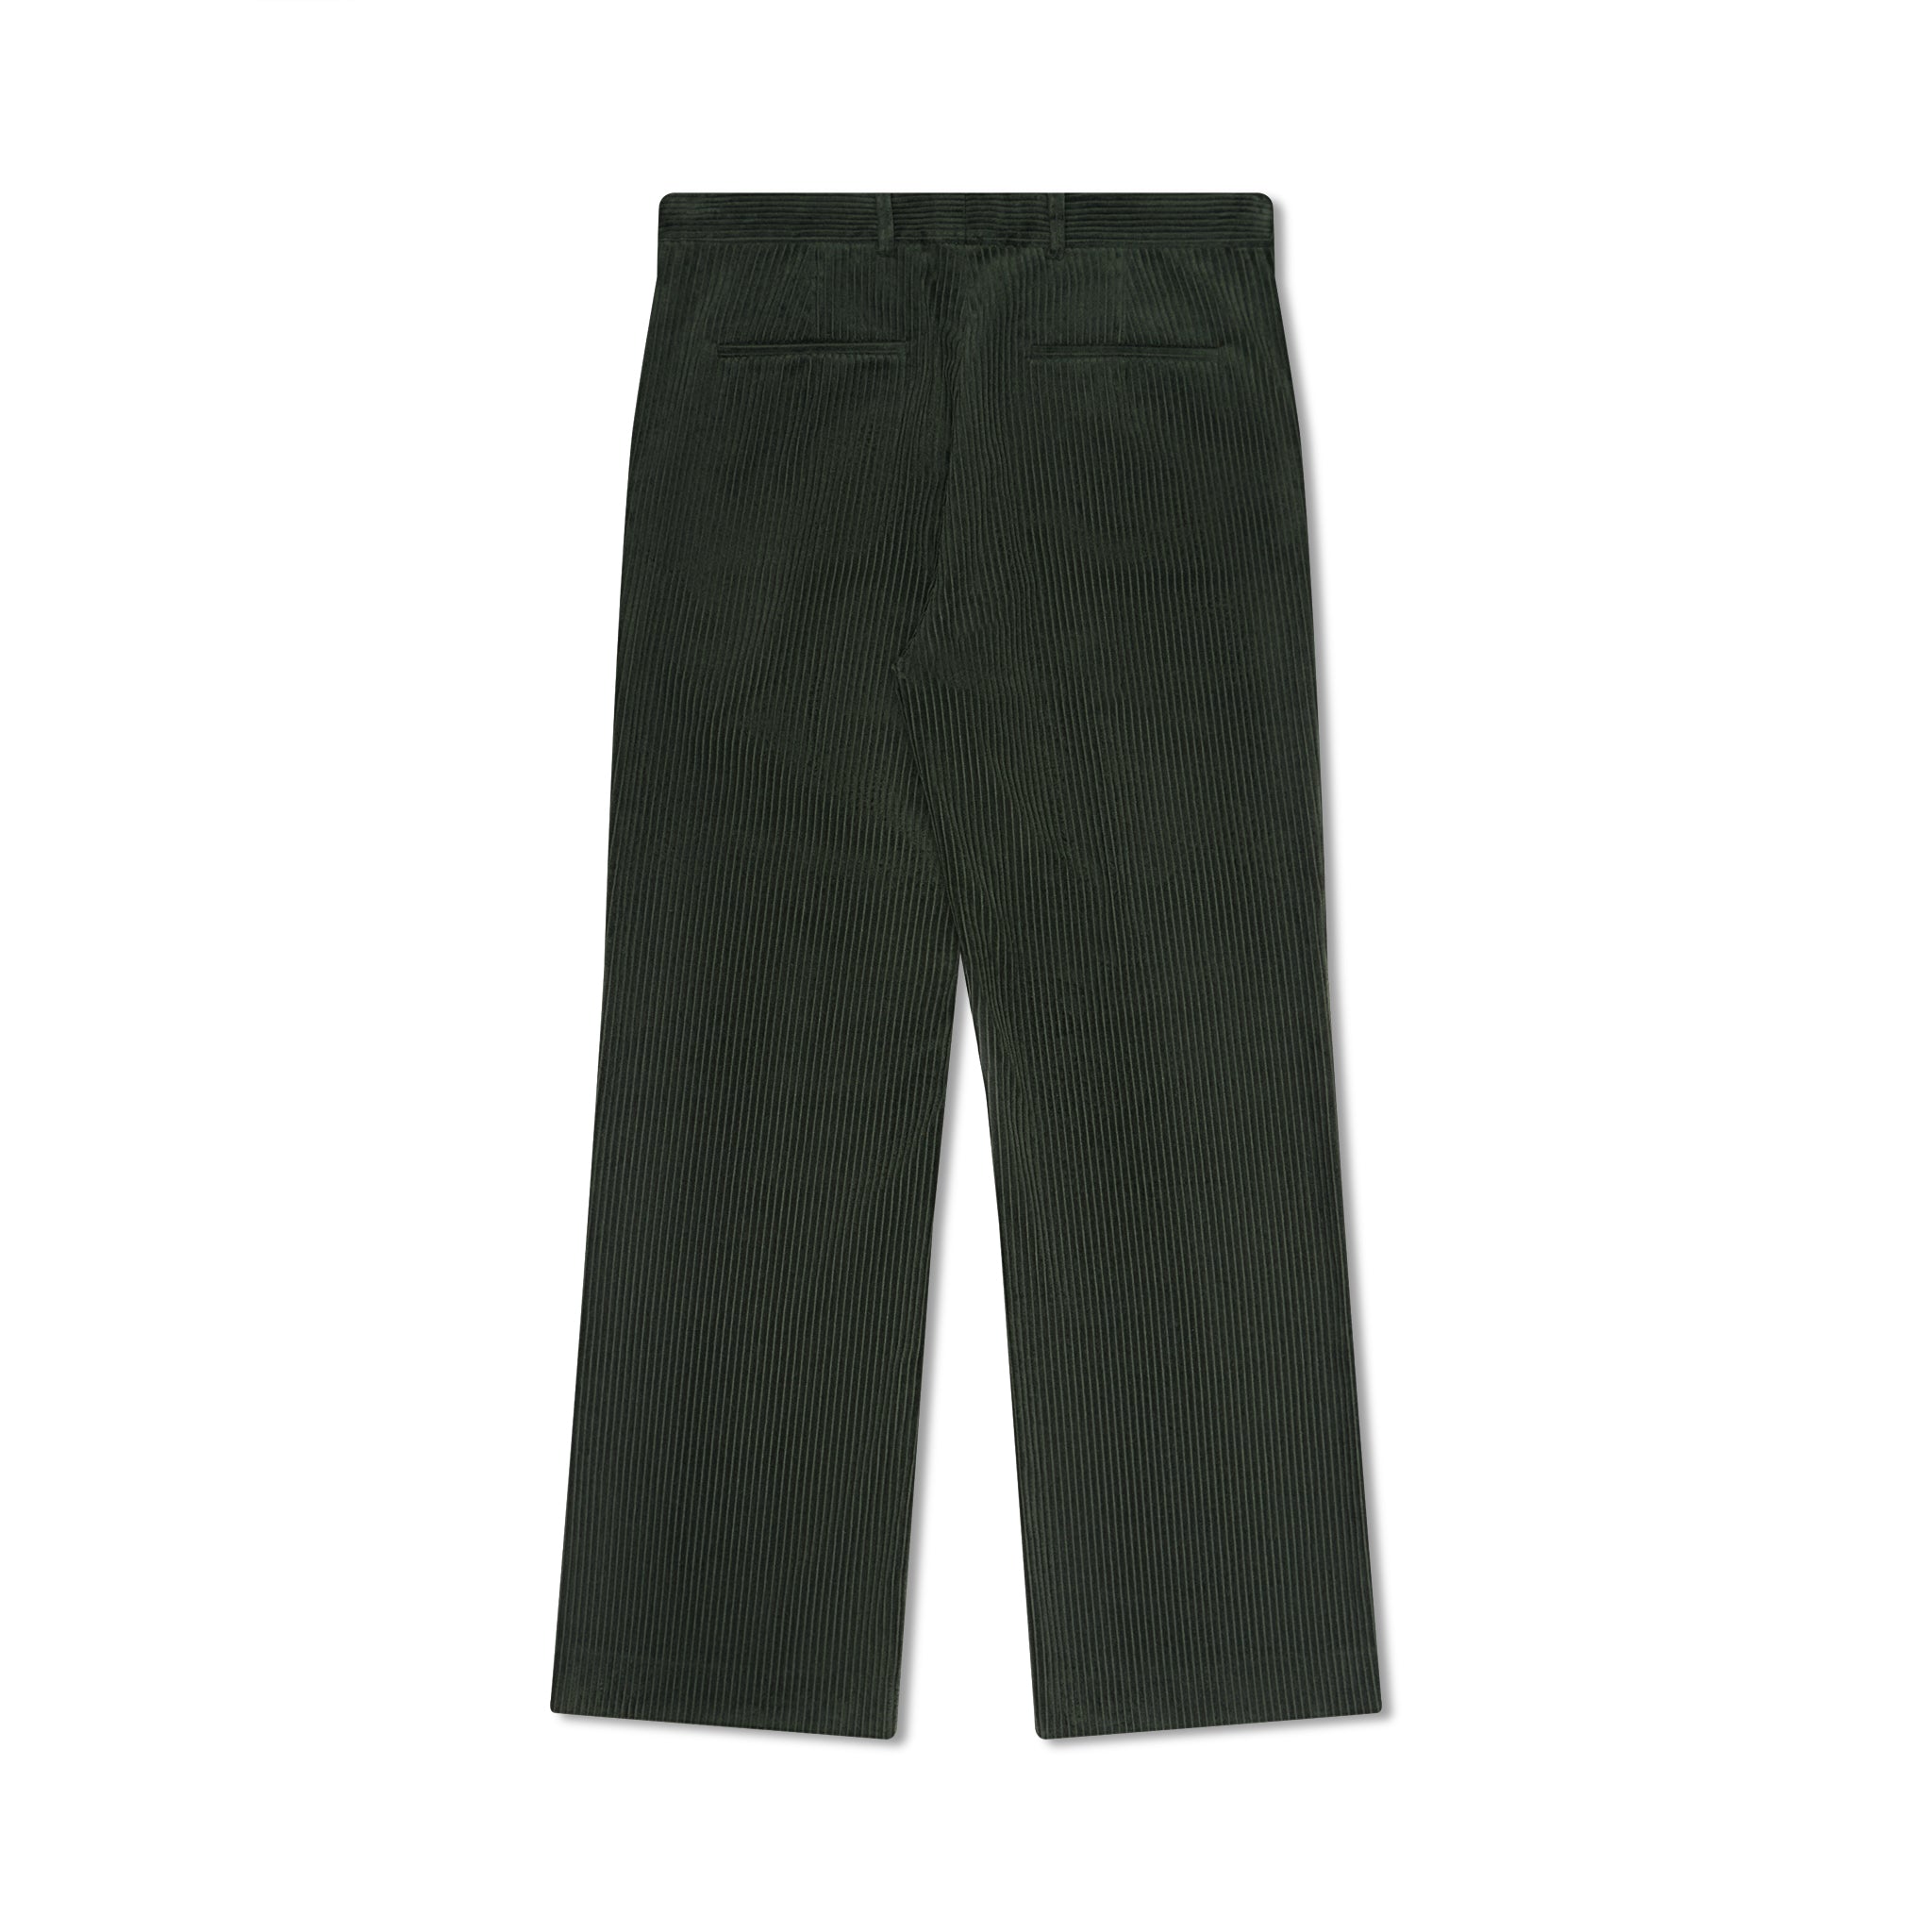 Green Corduroy Pants - Minted New York